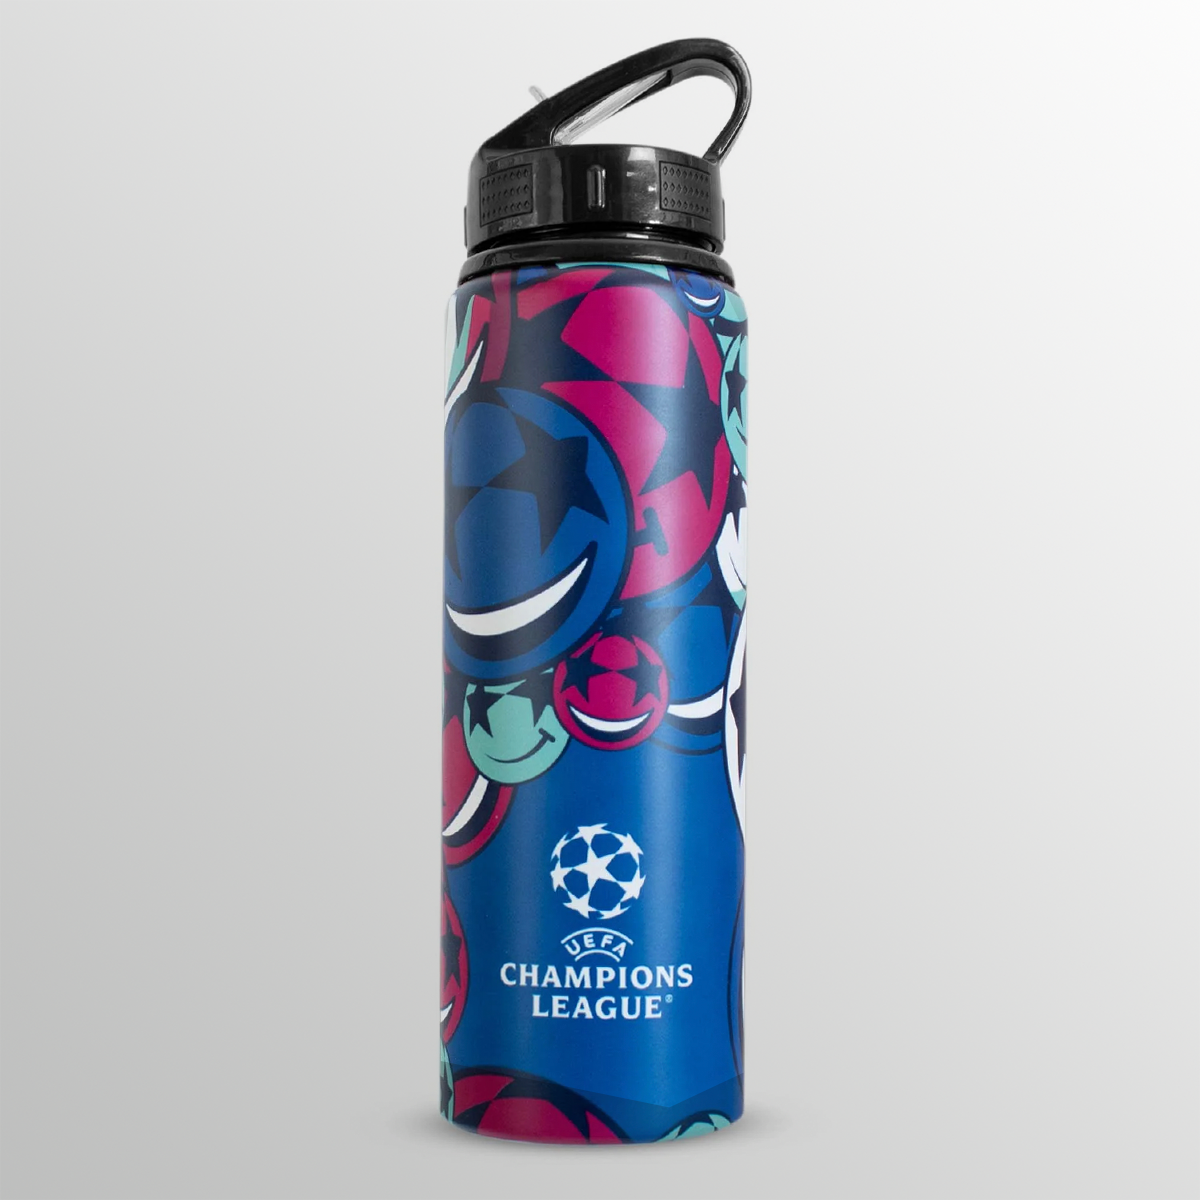 UEFA Champions League 750ml Aluminium Smiling Starball Water Bottle